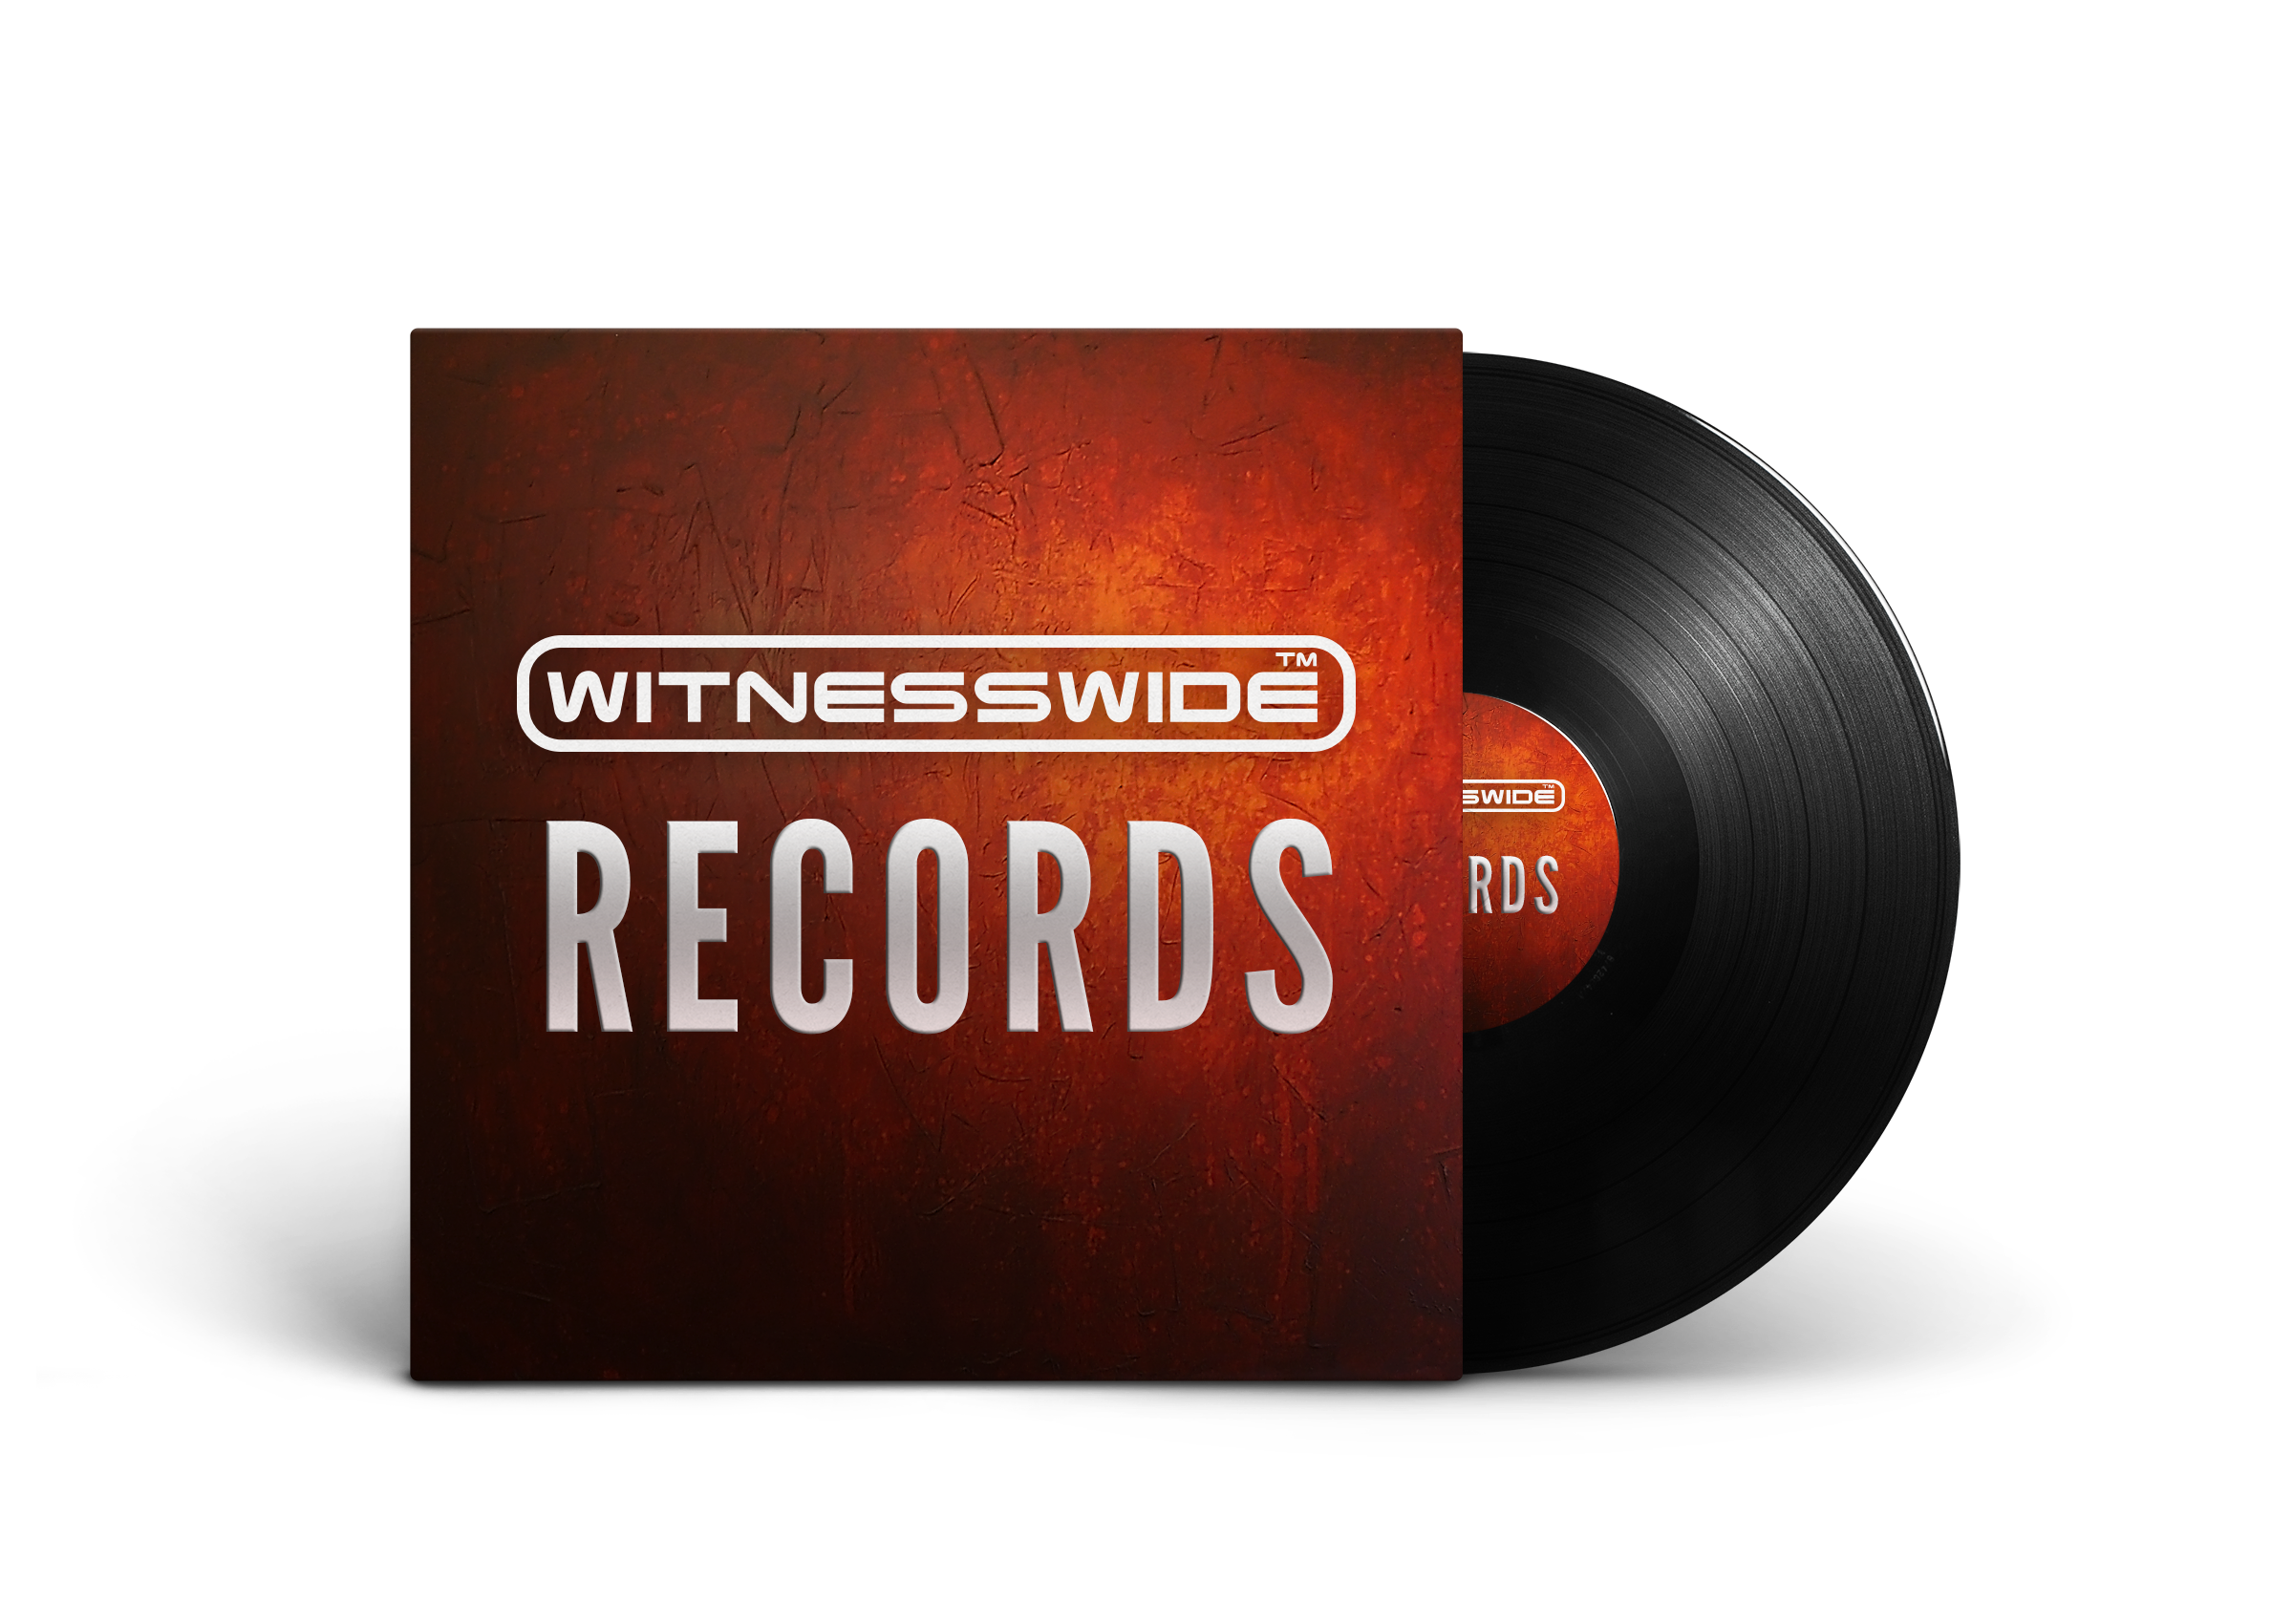 Witnesswide Records